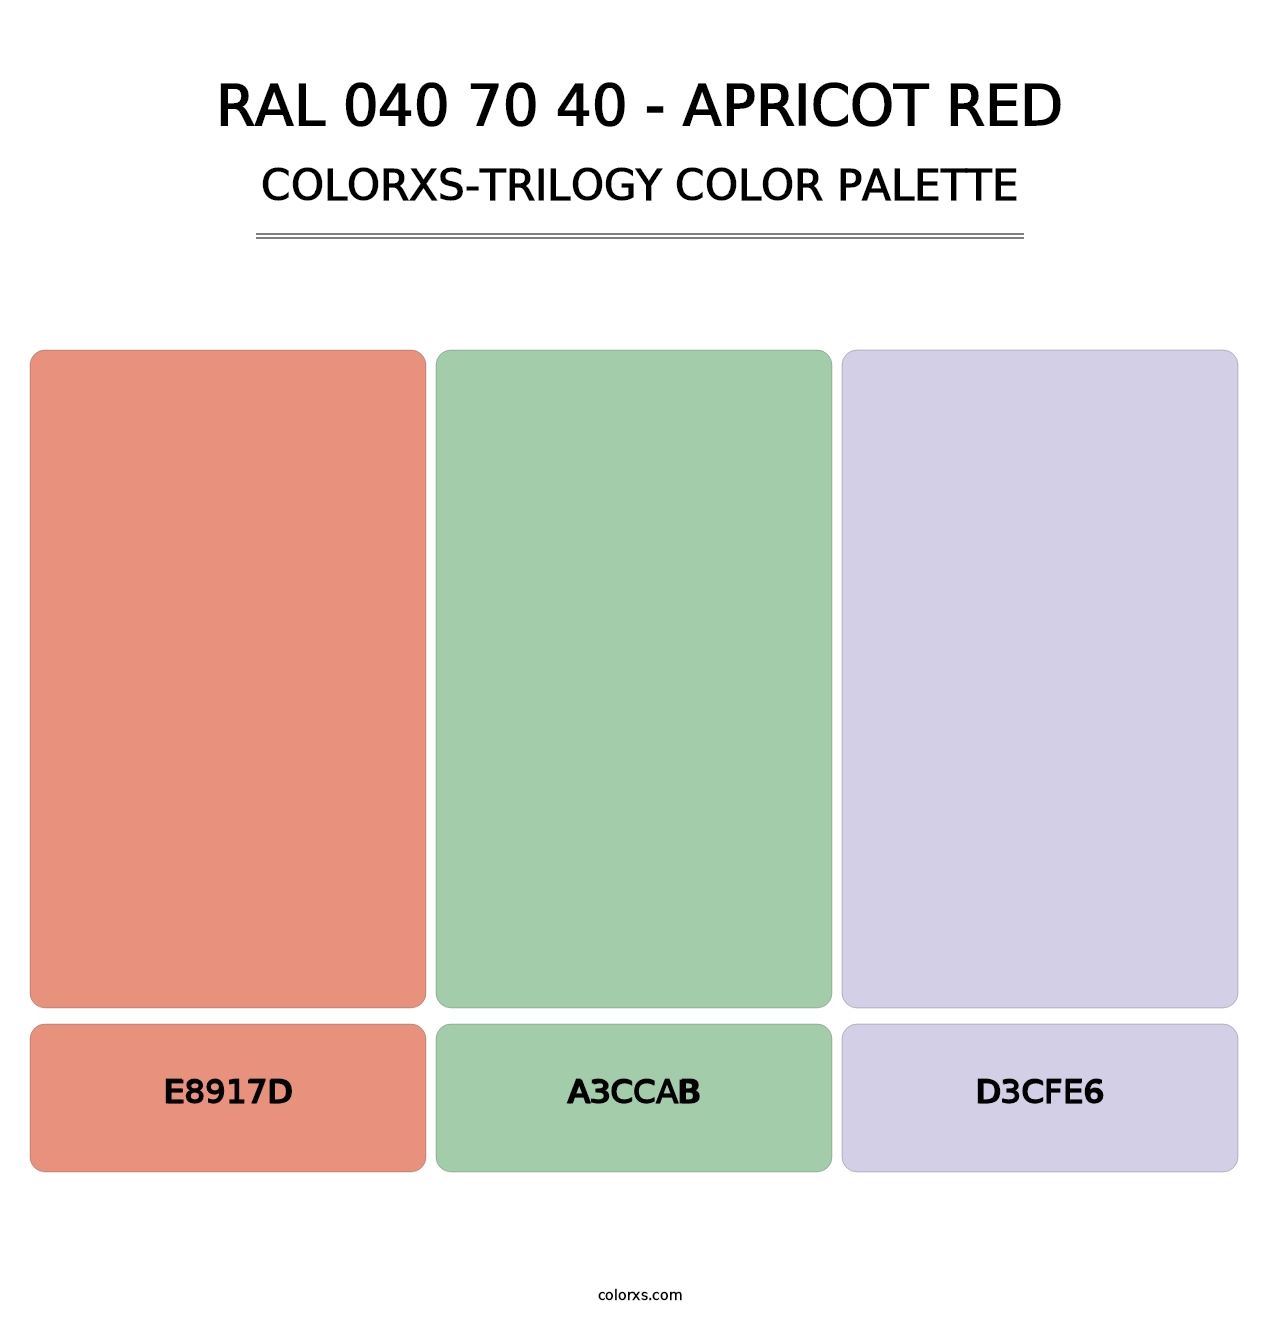 RAL 040 70 40 - Apricot Red - Colorxs Trilogy Palette